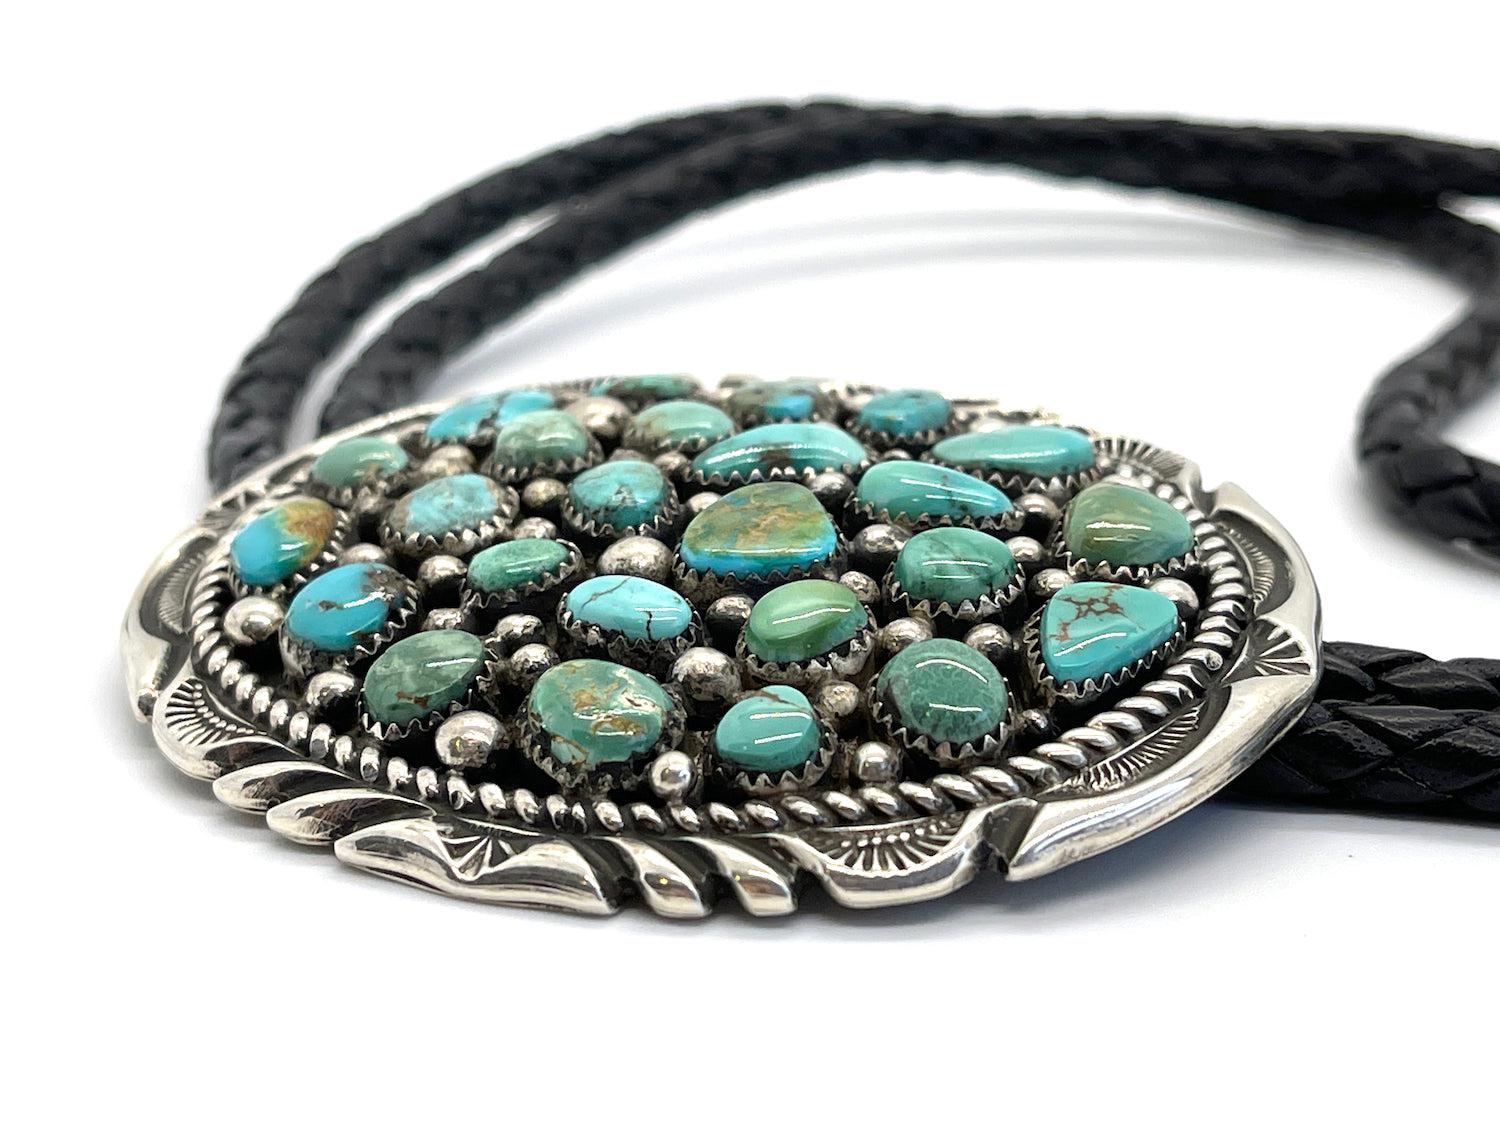 Royston Cluster Bolo Tie-jewelry-Jeanette Dale-Sorrel Sky Gallery